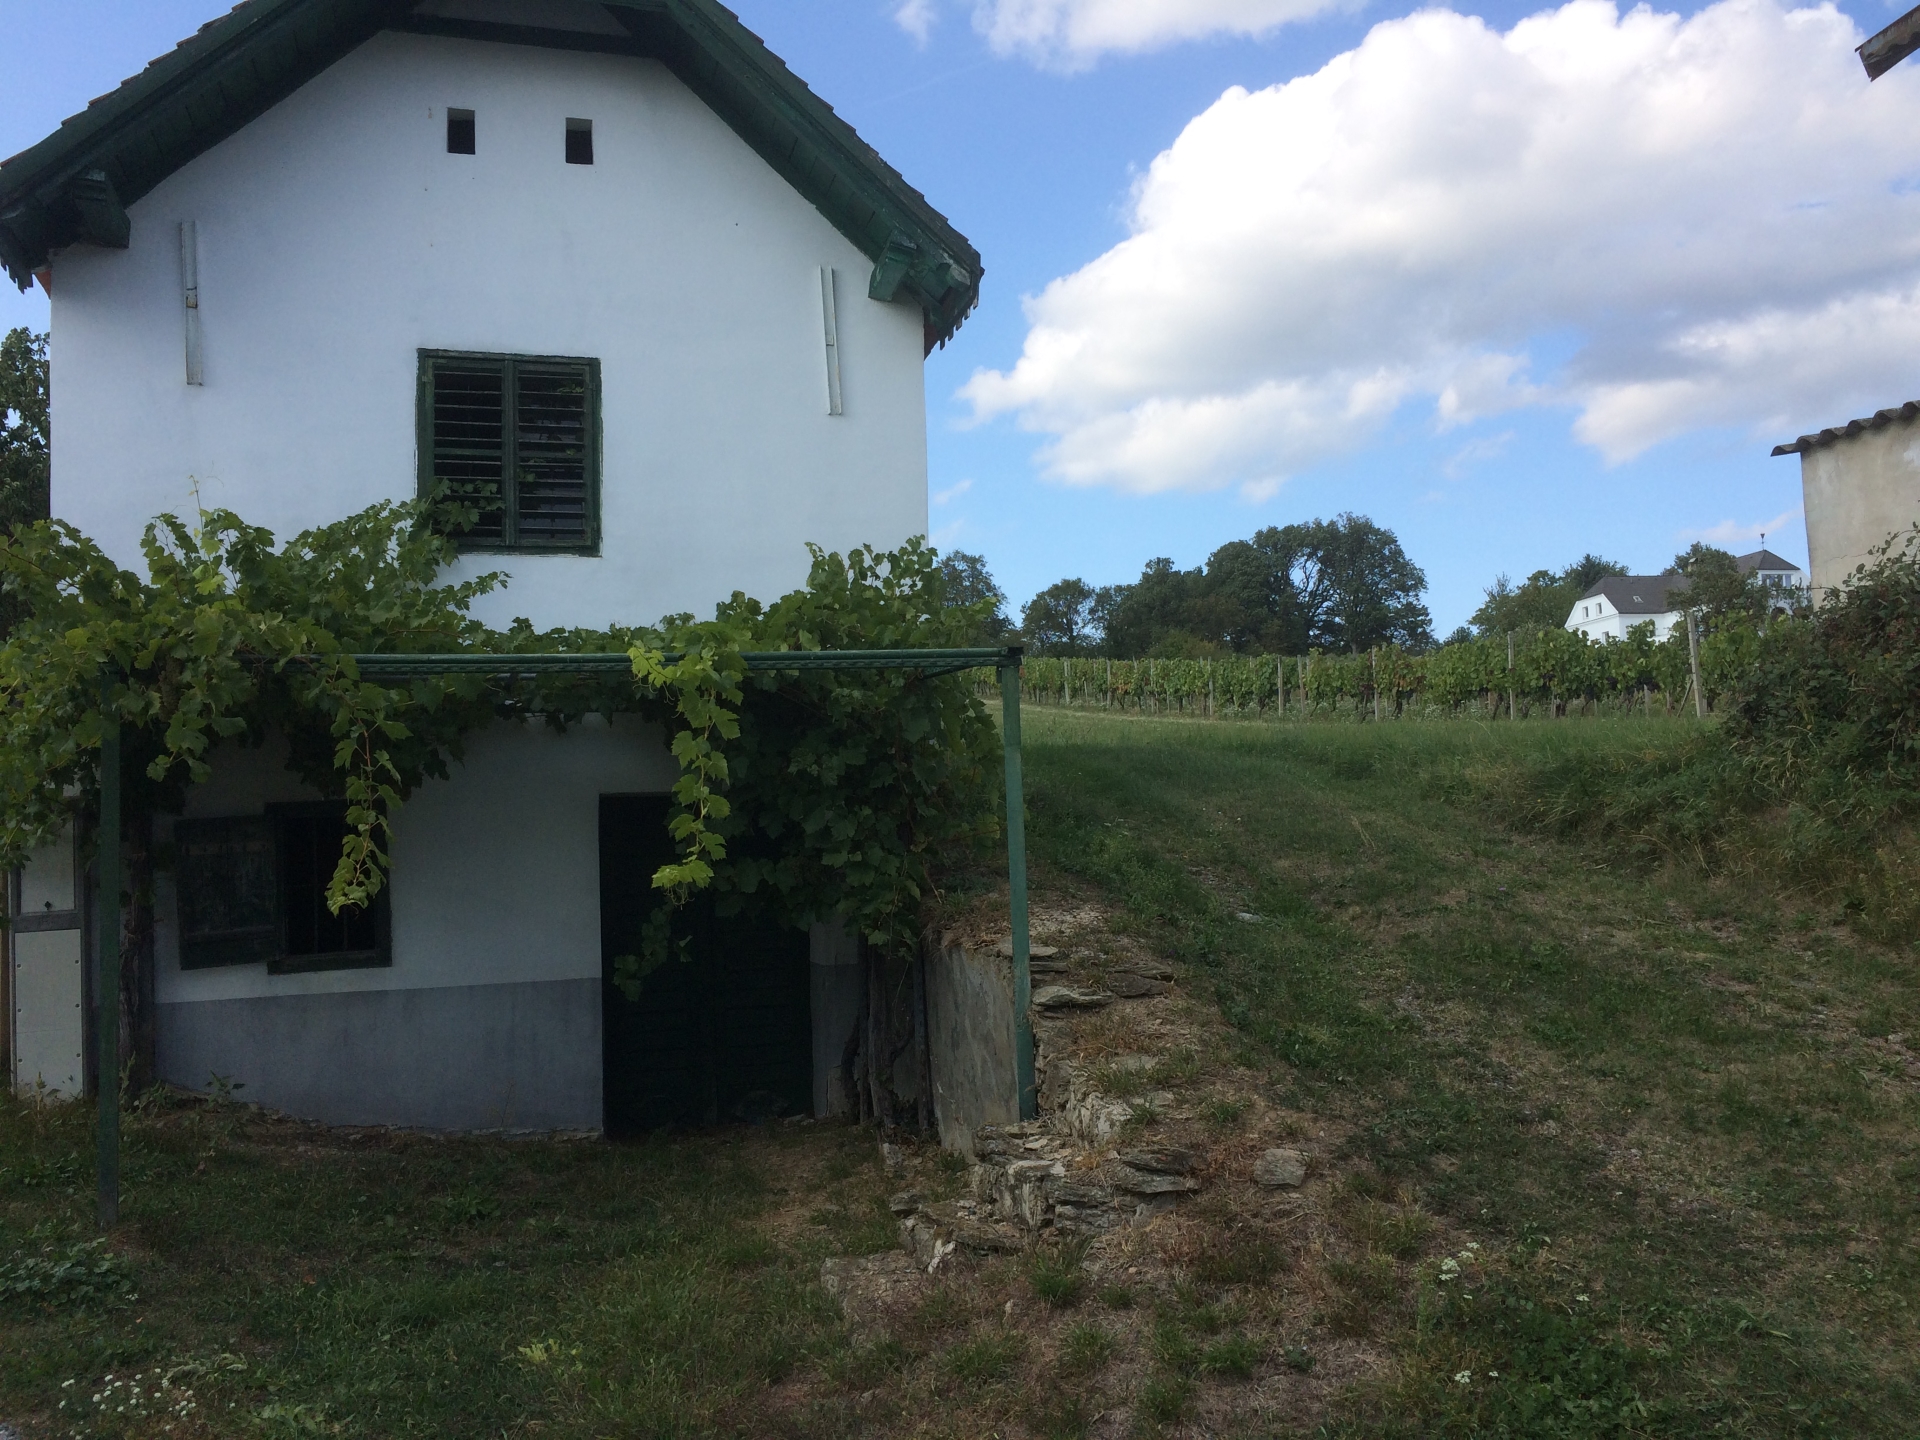 One of the vineyards in Rechnitz